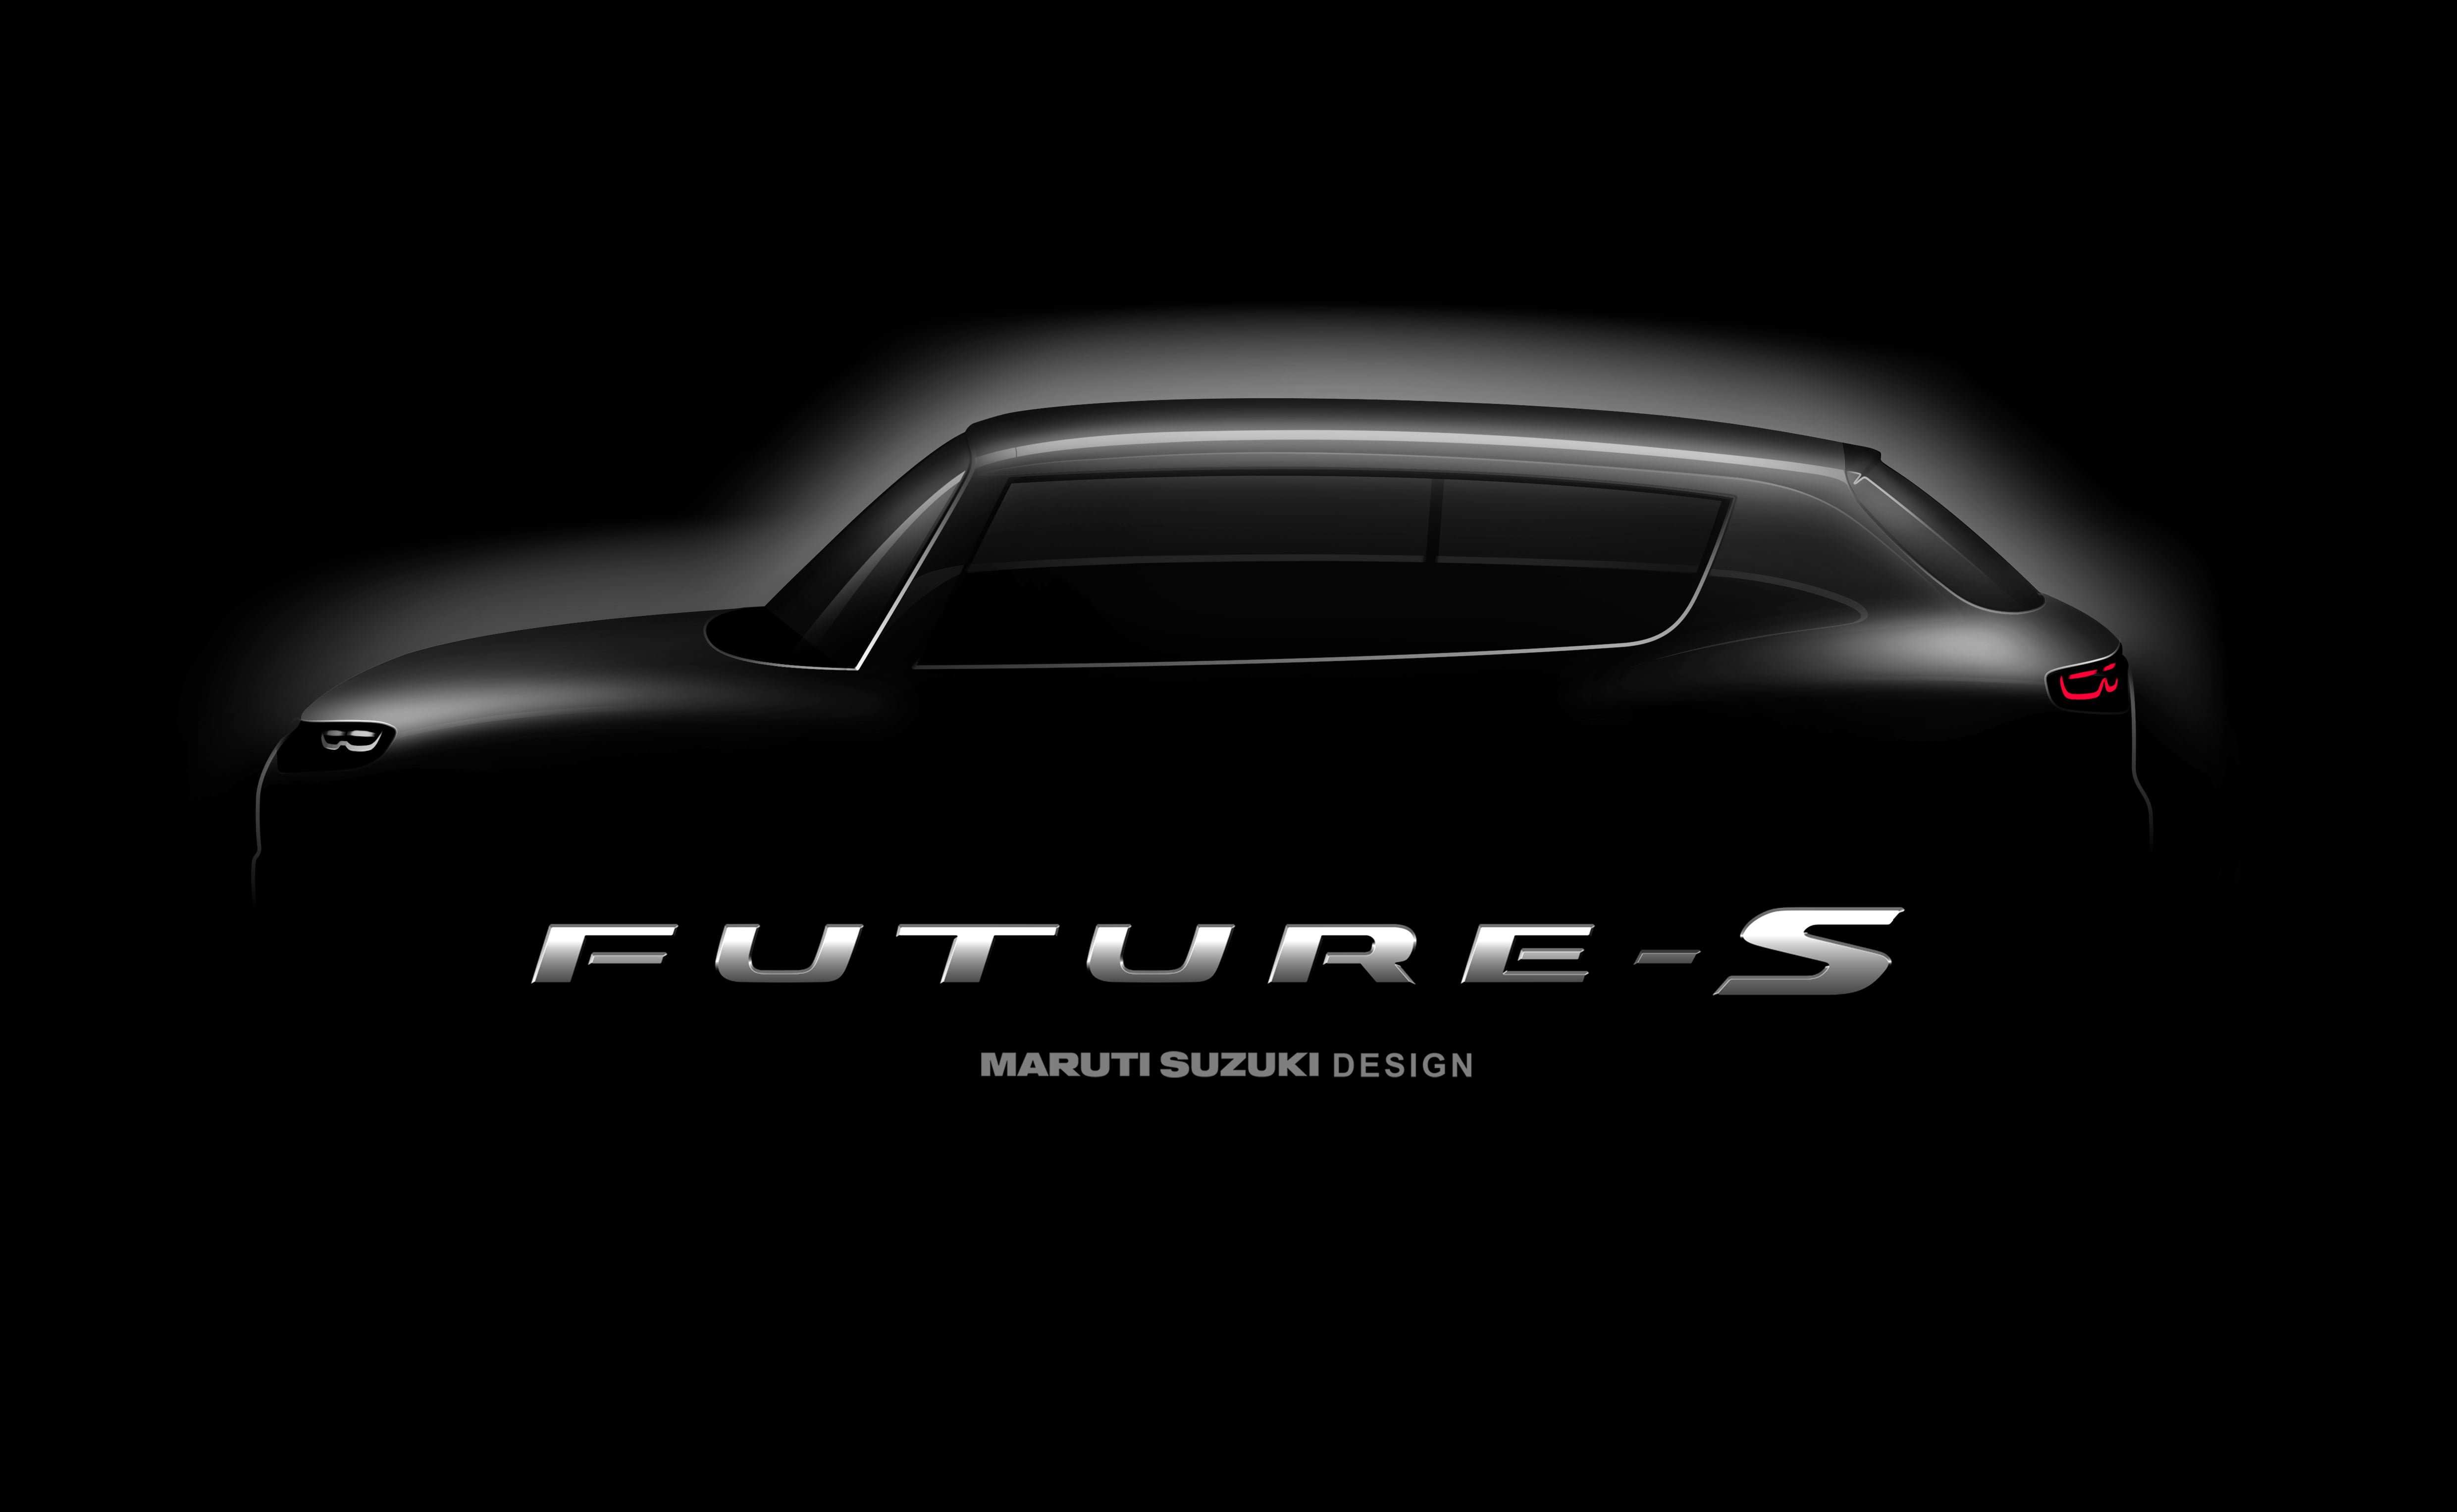 Maruti Future S Concept Teaser images